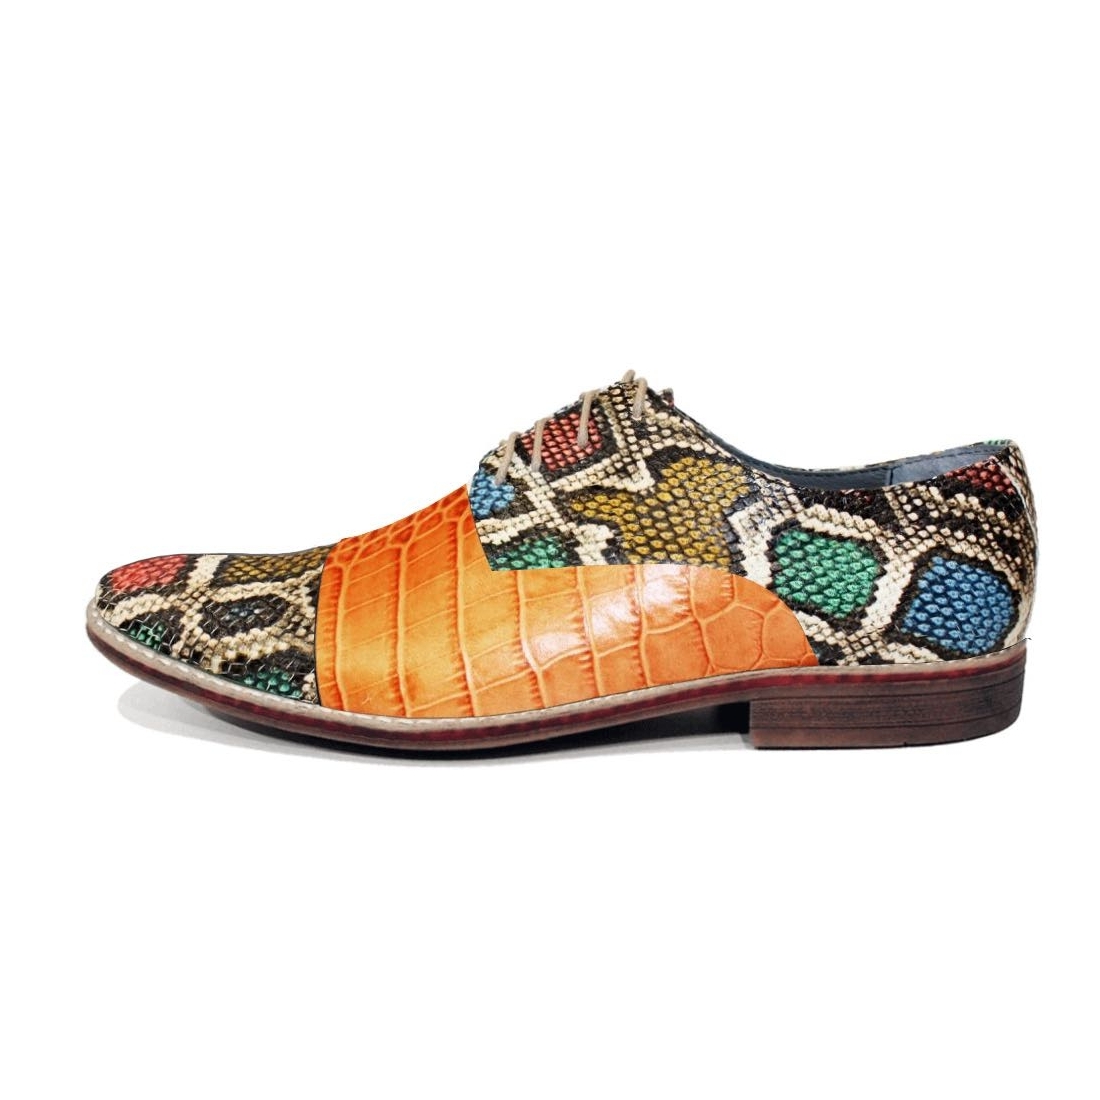 Modello Gadello - Классическая обувь - Handmade Colorful Italian Leather Shoes